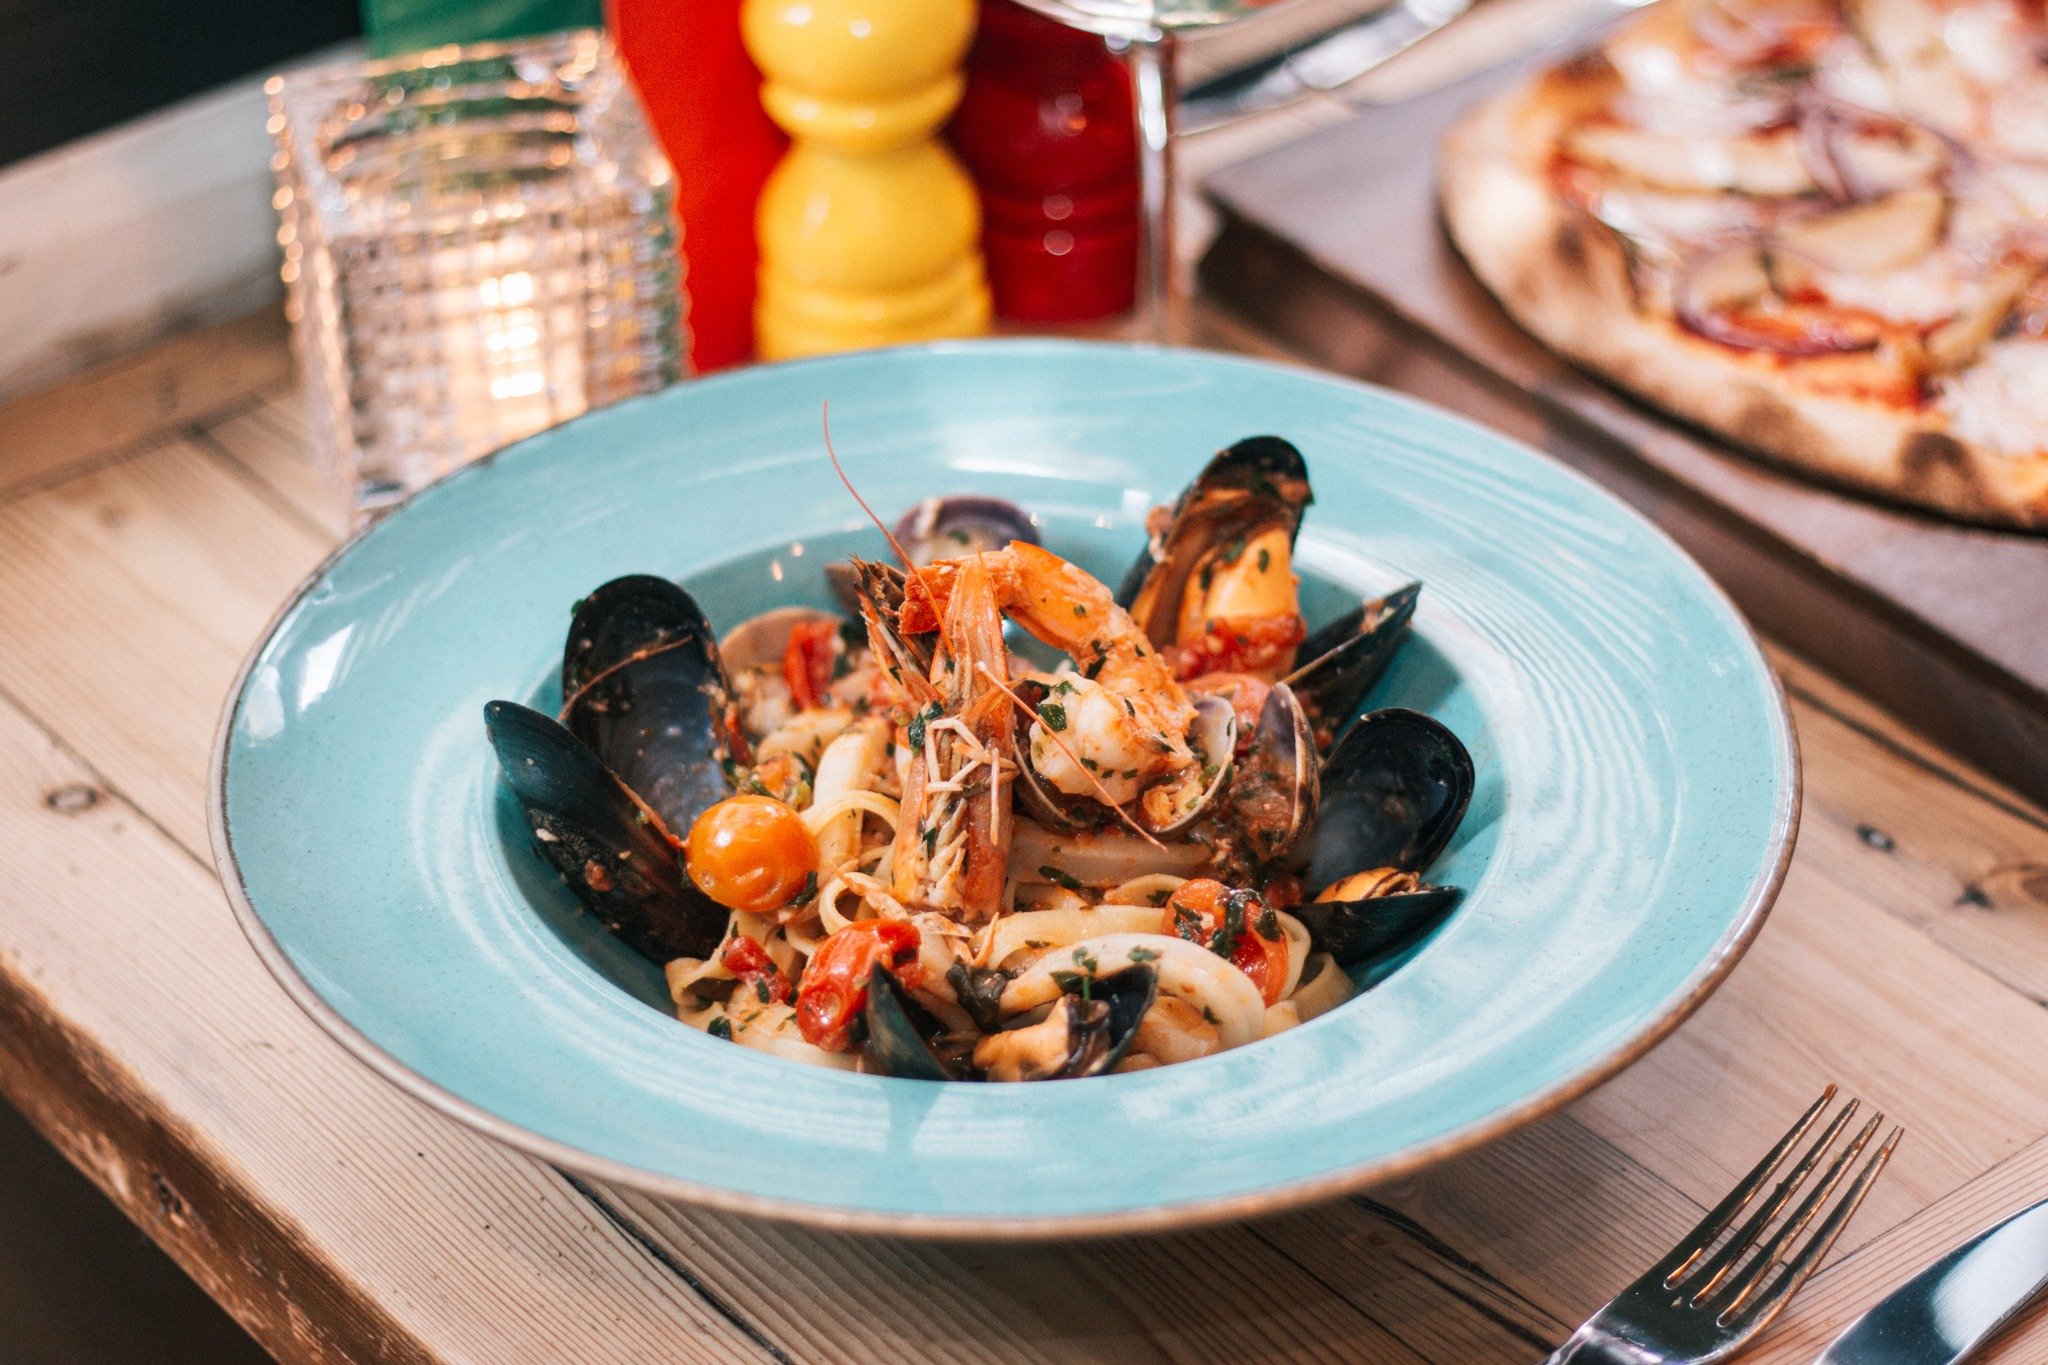 Dive into the freshness with our seafood pastas. 

#SeafoodLover #FreshCatch #pasta #VespaRestaurant #pretheatremenu #independentitalianrestaurantlondon #VespaLeicesterSquare #vespaitalianrestaturant #vespaitalian #italianrestaurant #vespaitalianlond